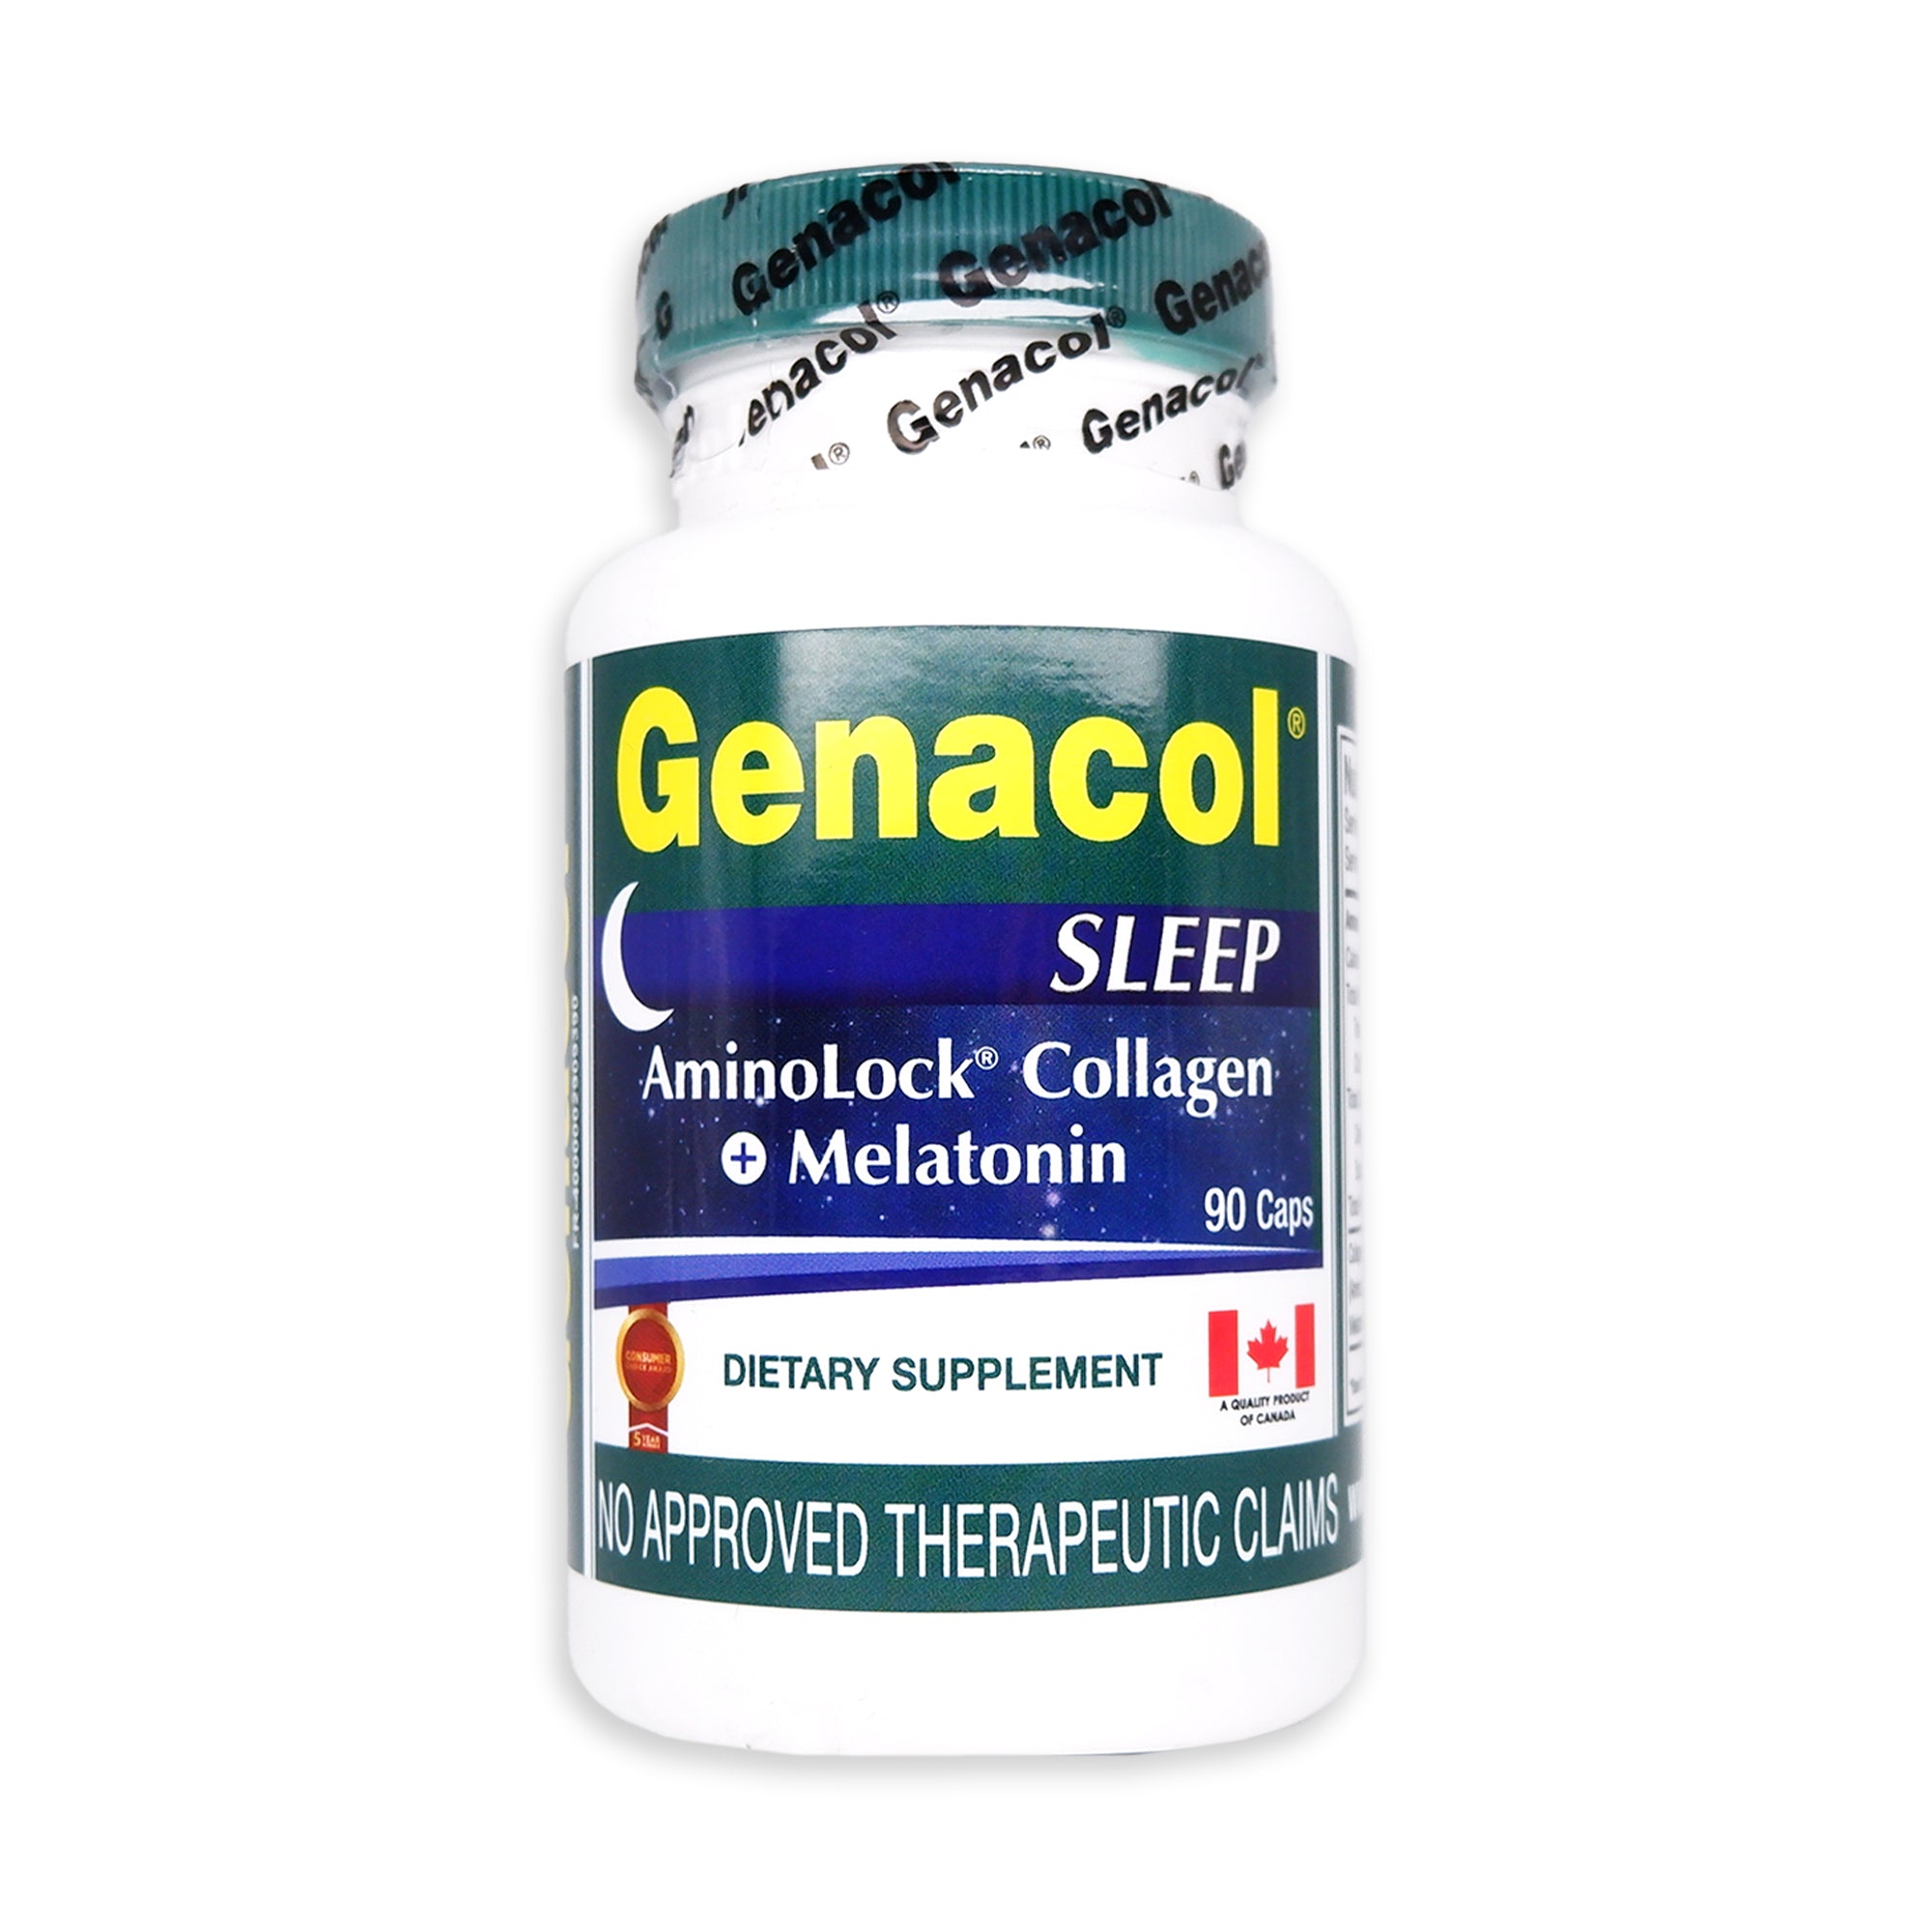 Genacol Sleep 90s x 2 Bottles